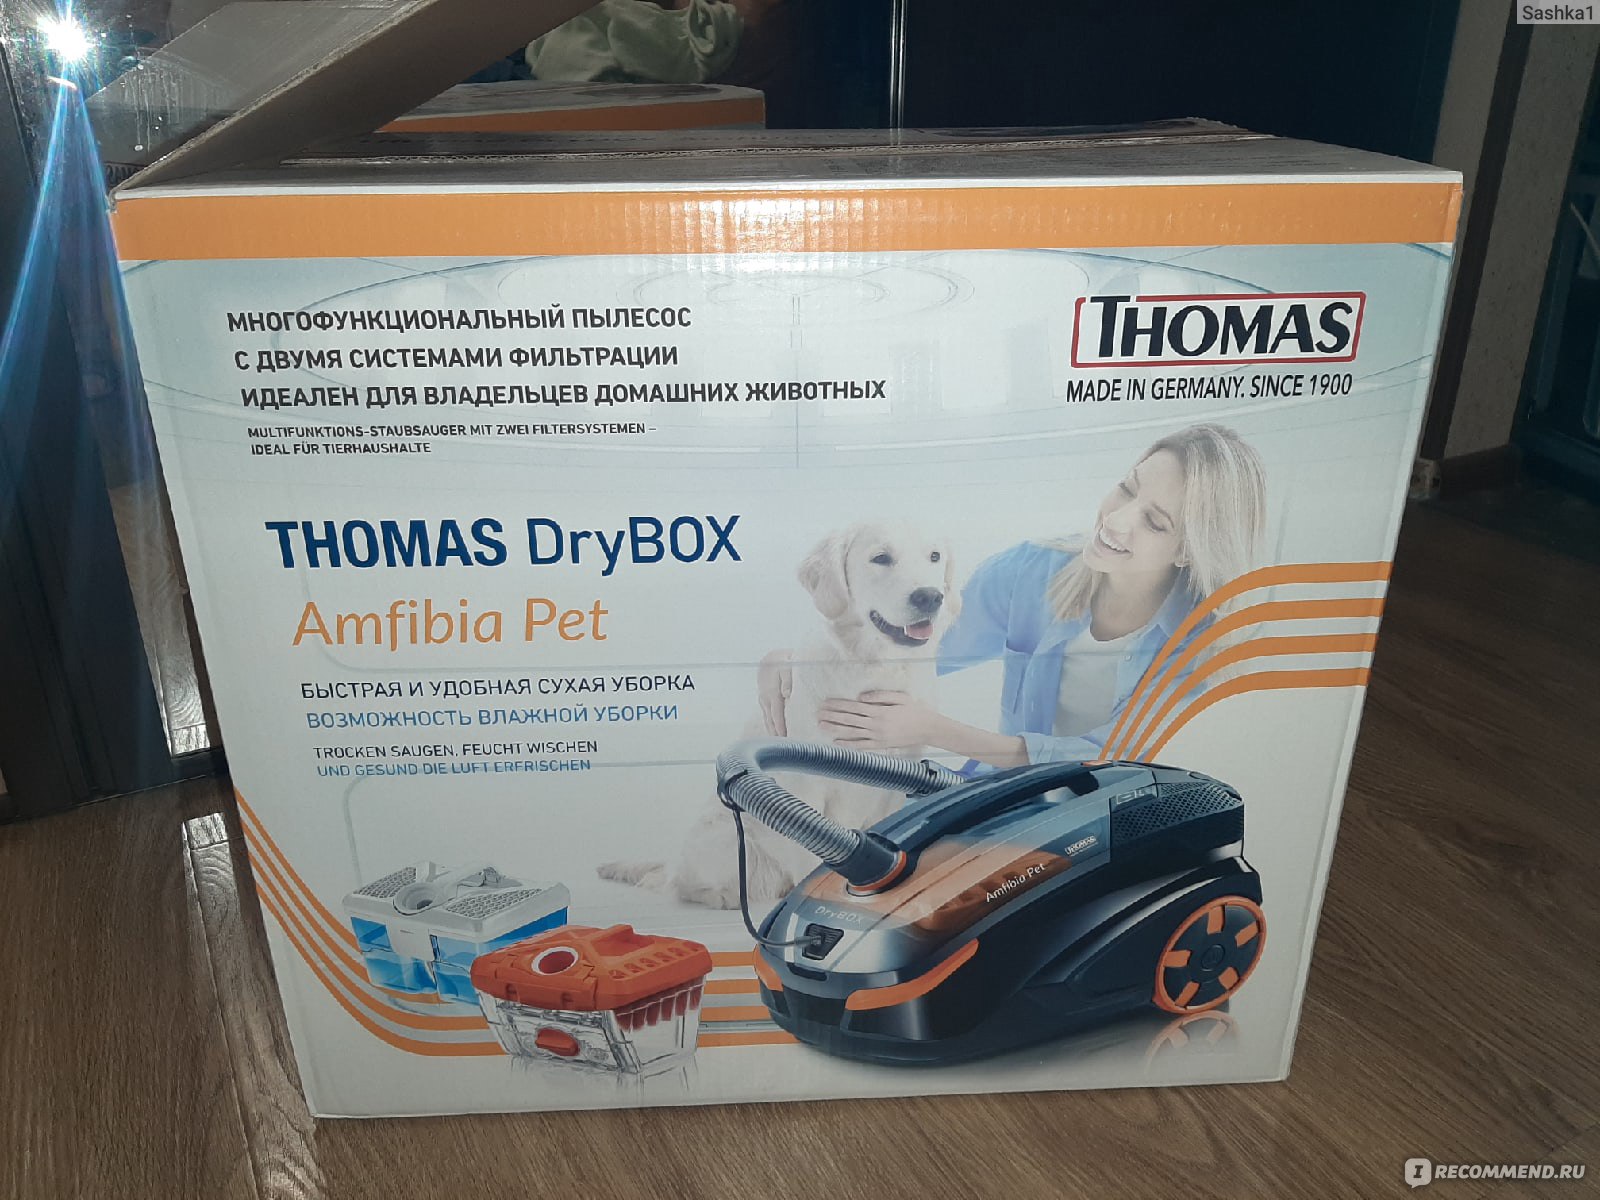 Thomas 788598 drybox amfibia pet